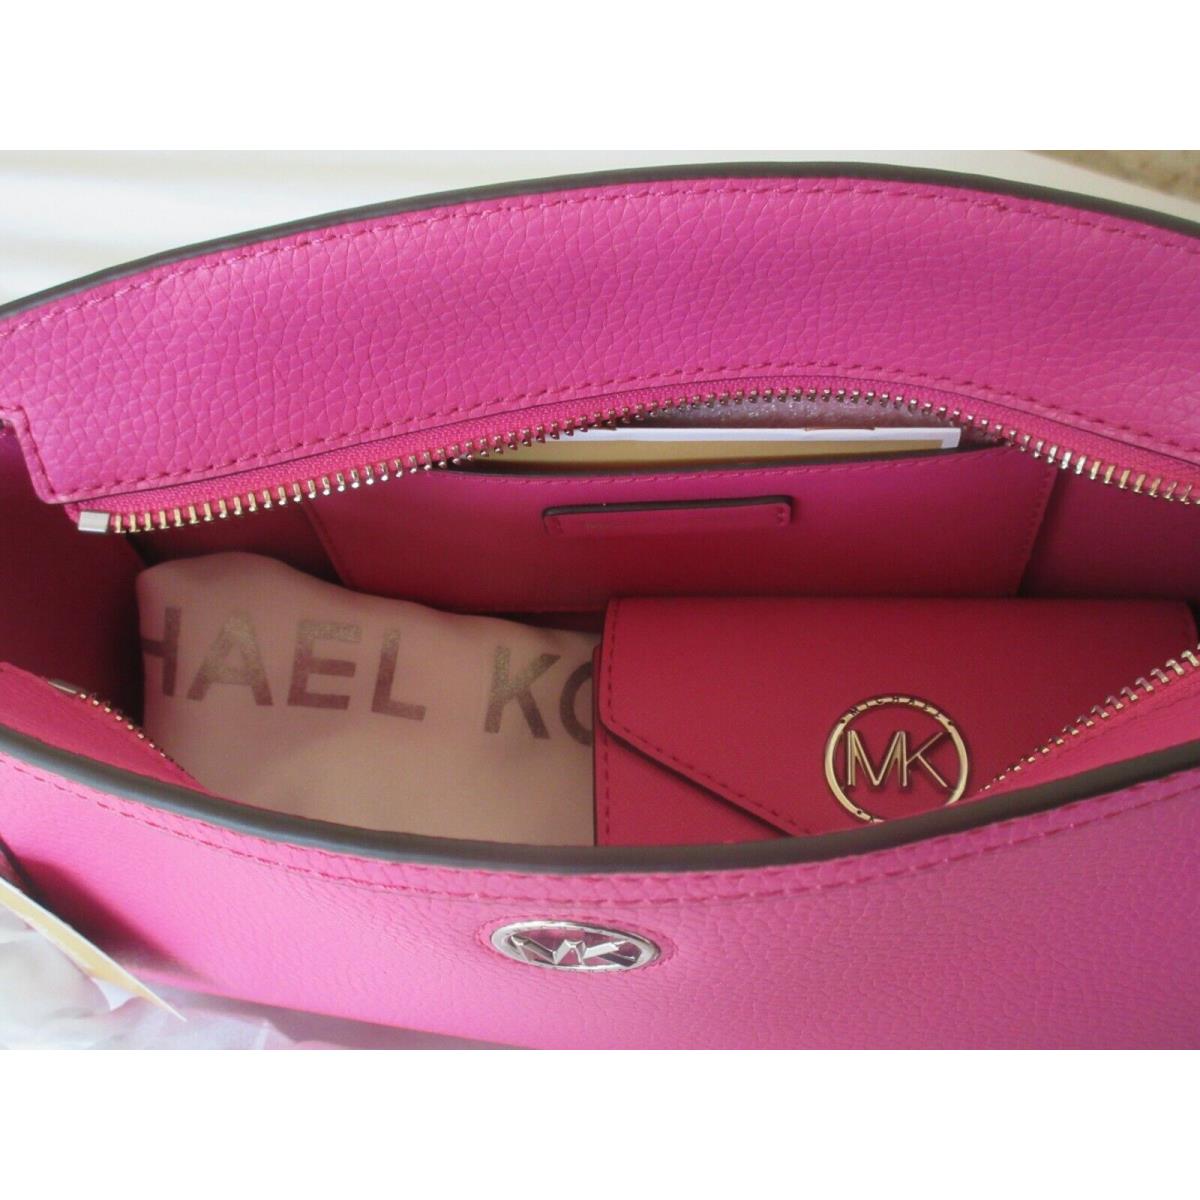 Michael Kors  bag  Chantal - Cerise/Pink Bright Colorful Handle/Strap, Silver Hardware, Cerise (Pink) Silver hardware Exterior 3